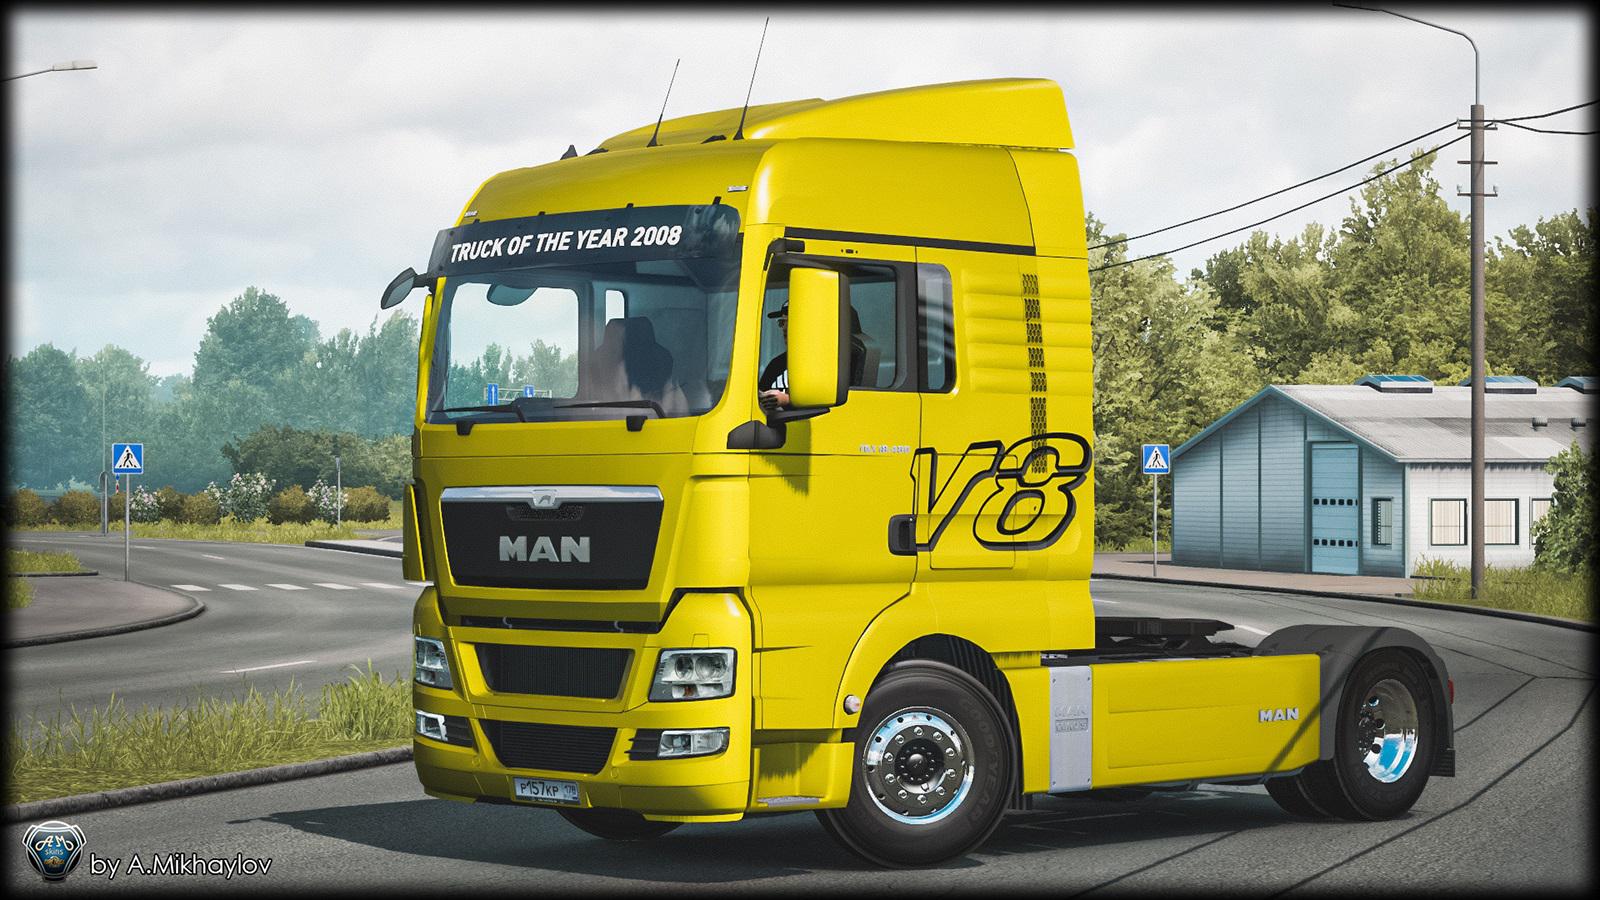 Ets2 Man Tgx Euro 5 V8 Multicolor Skin Pack V10 136x Euro Truck Simulator 2 Modsclub 6675